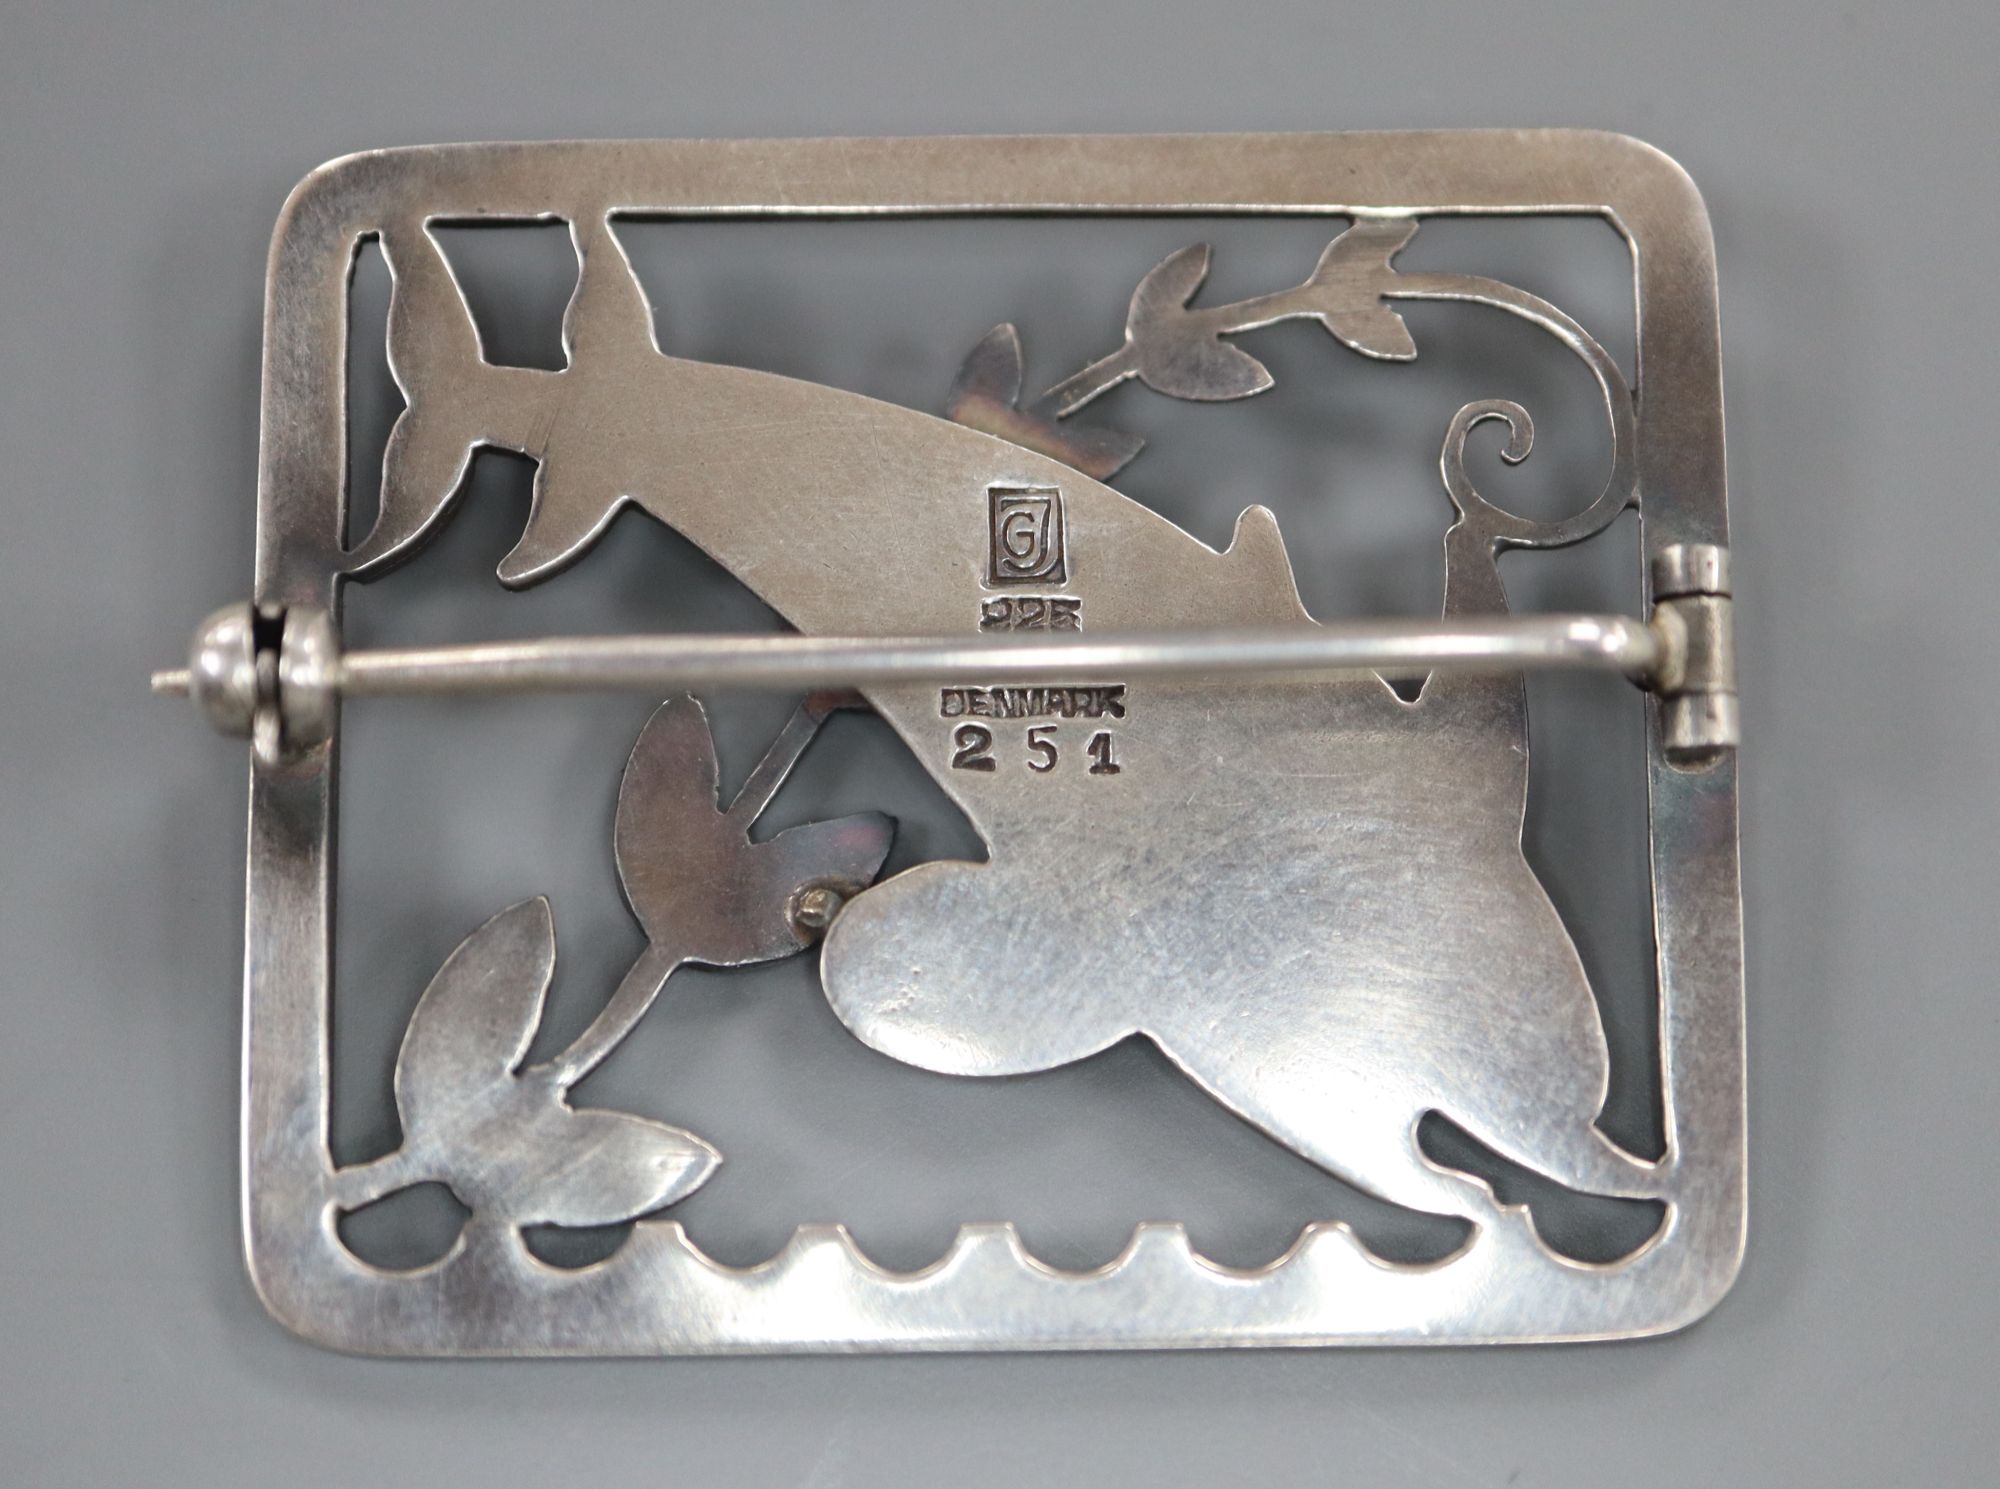 A George Jensen sterling twin dolphin square brooch, designed by Arno Malinowski, no. 255, 37mm.